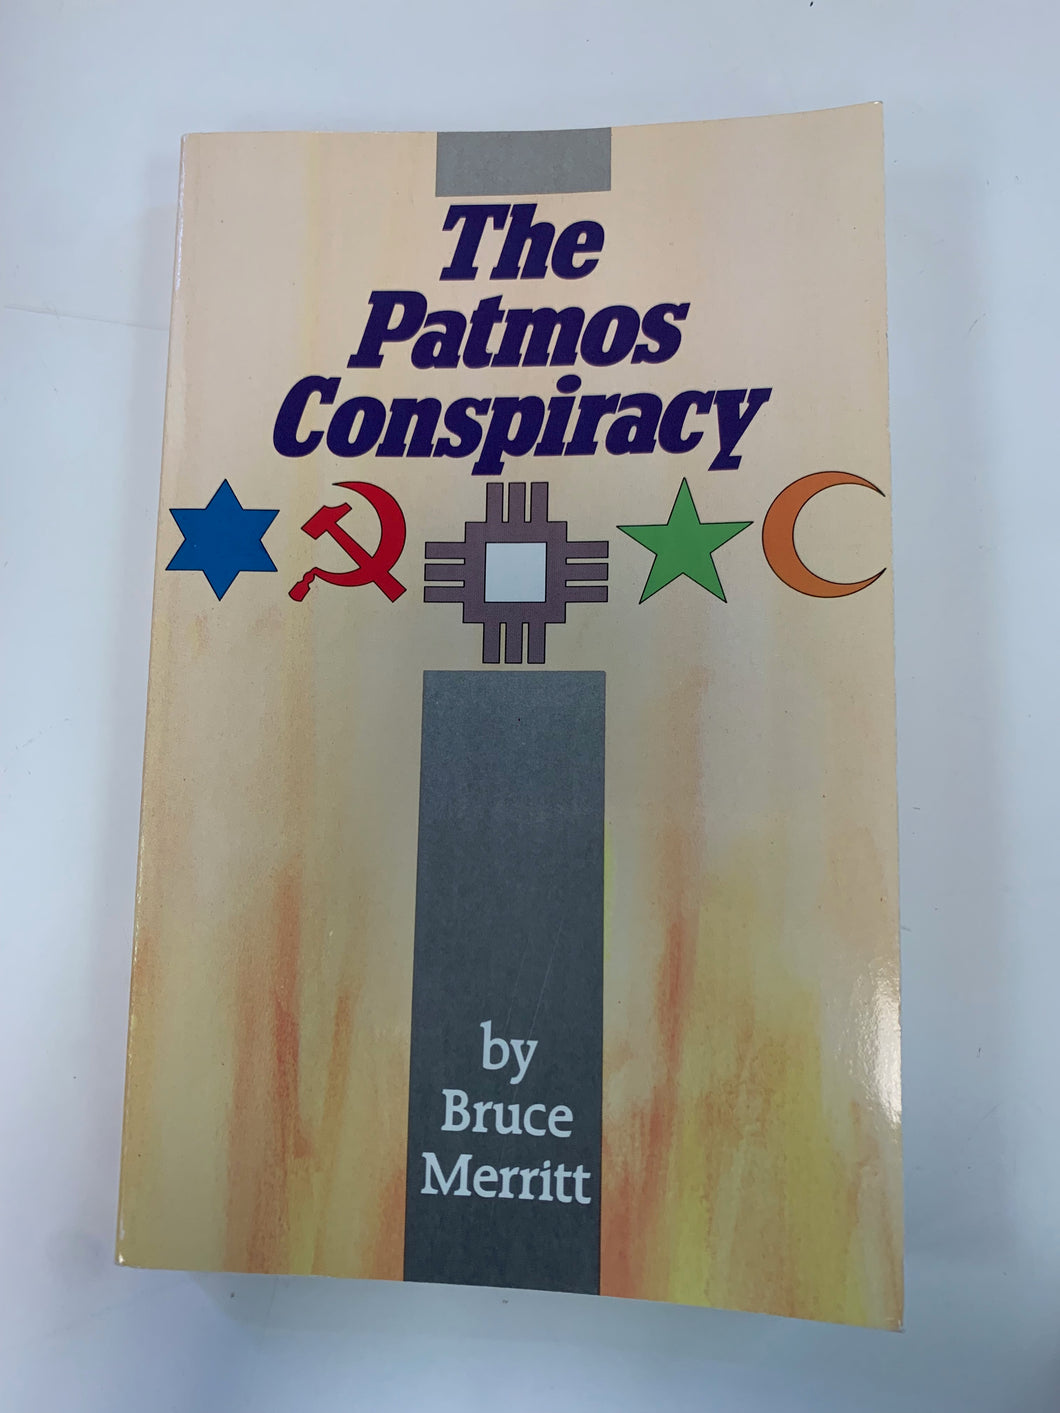 The Patmos Conspiracy by Bruce Merritt